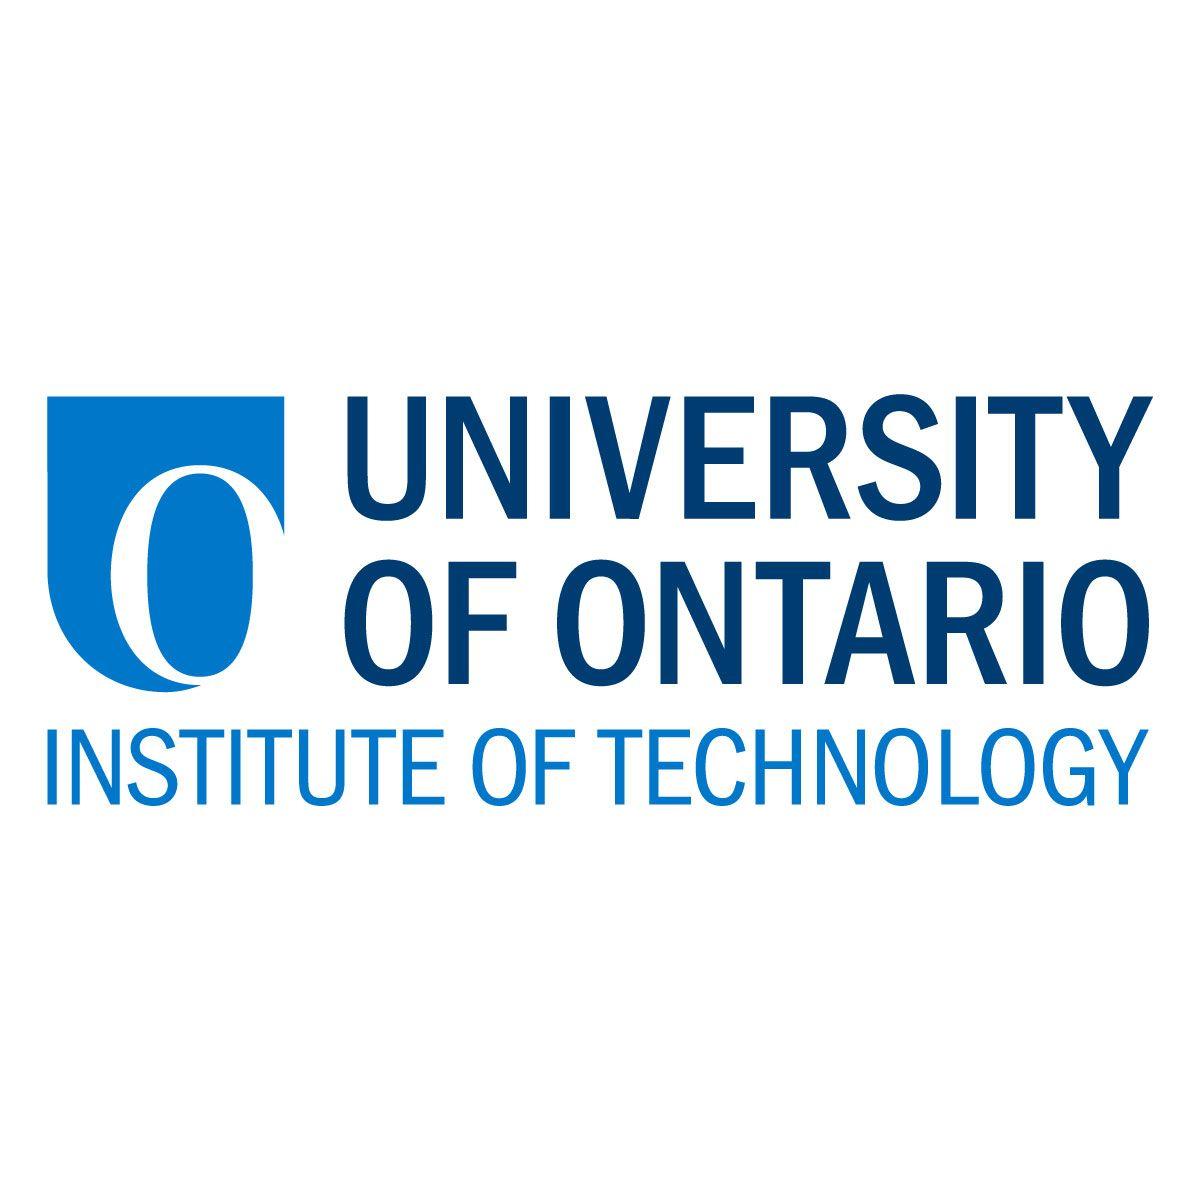 Ontario Logo - University of Ontario Institute of Technology